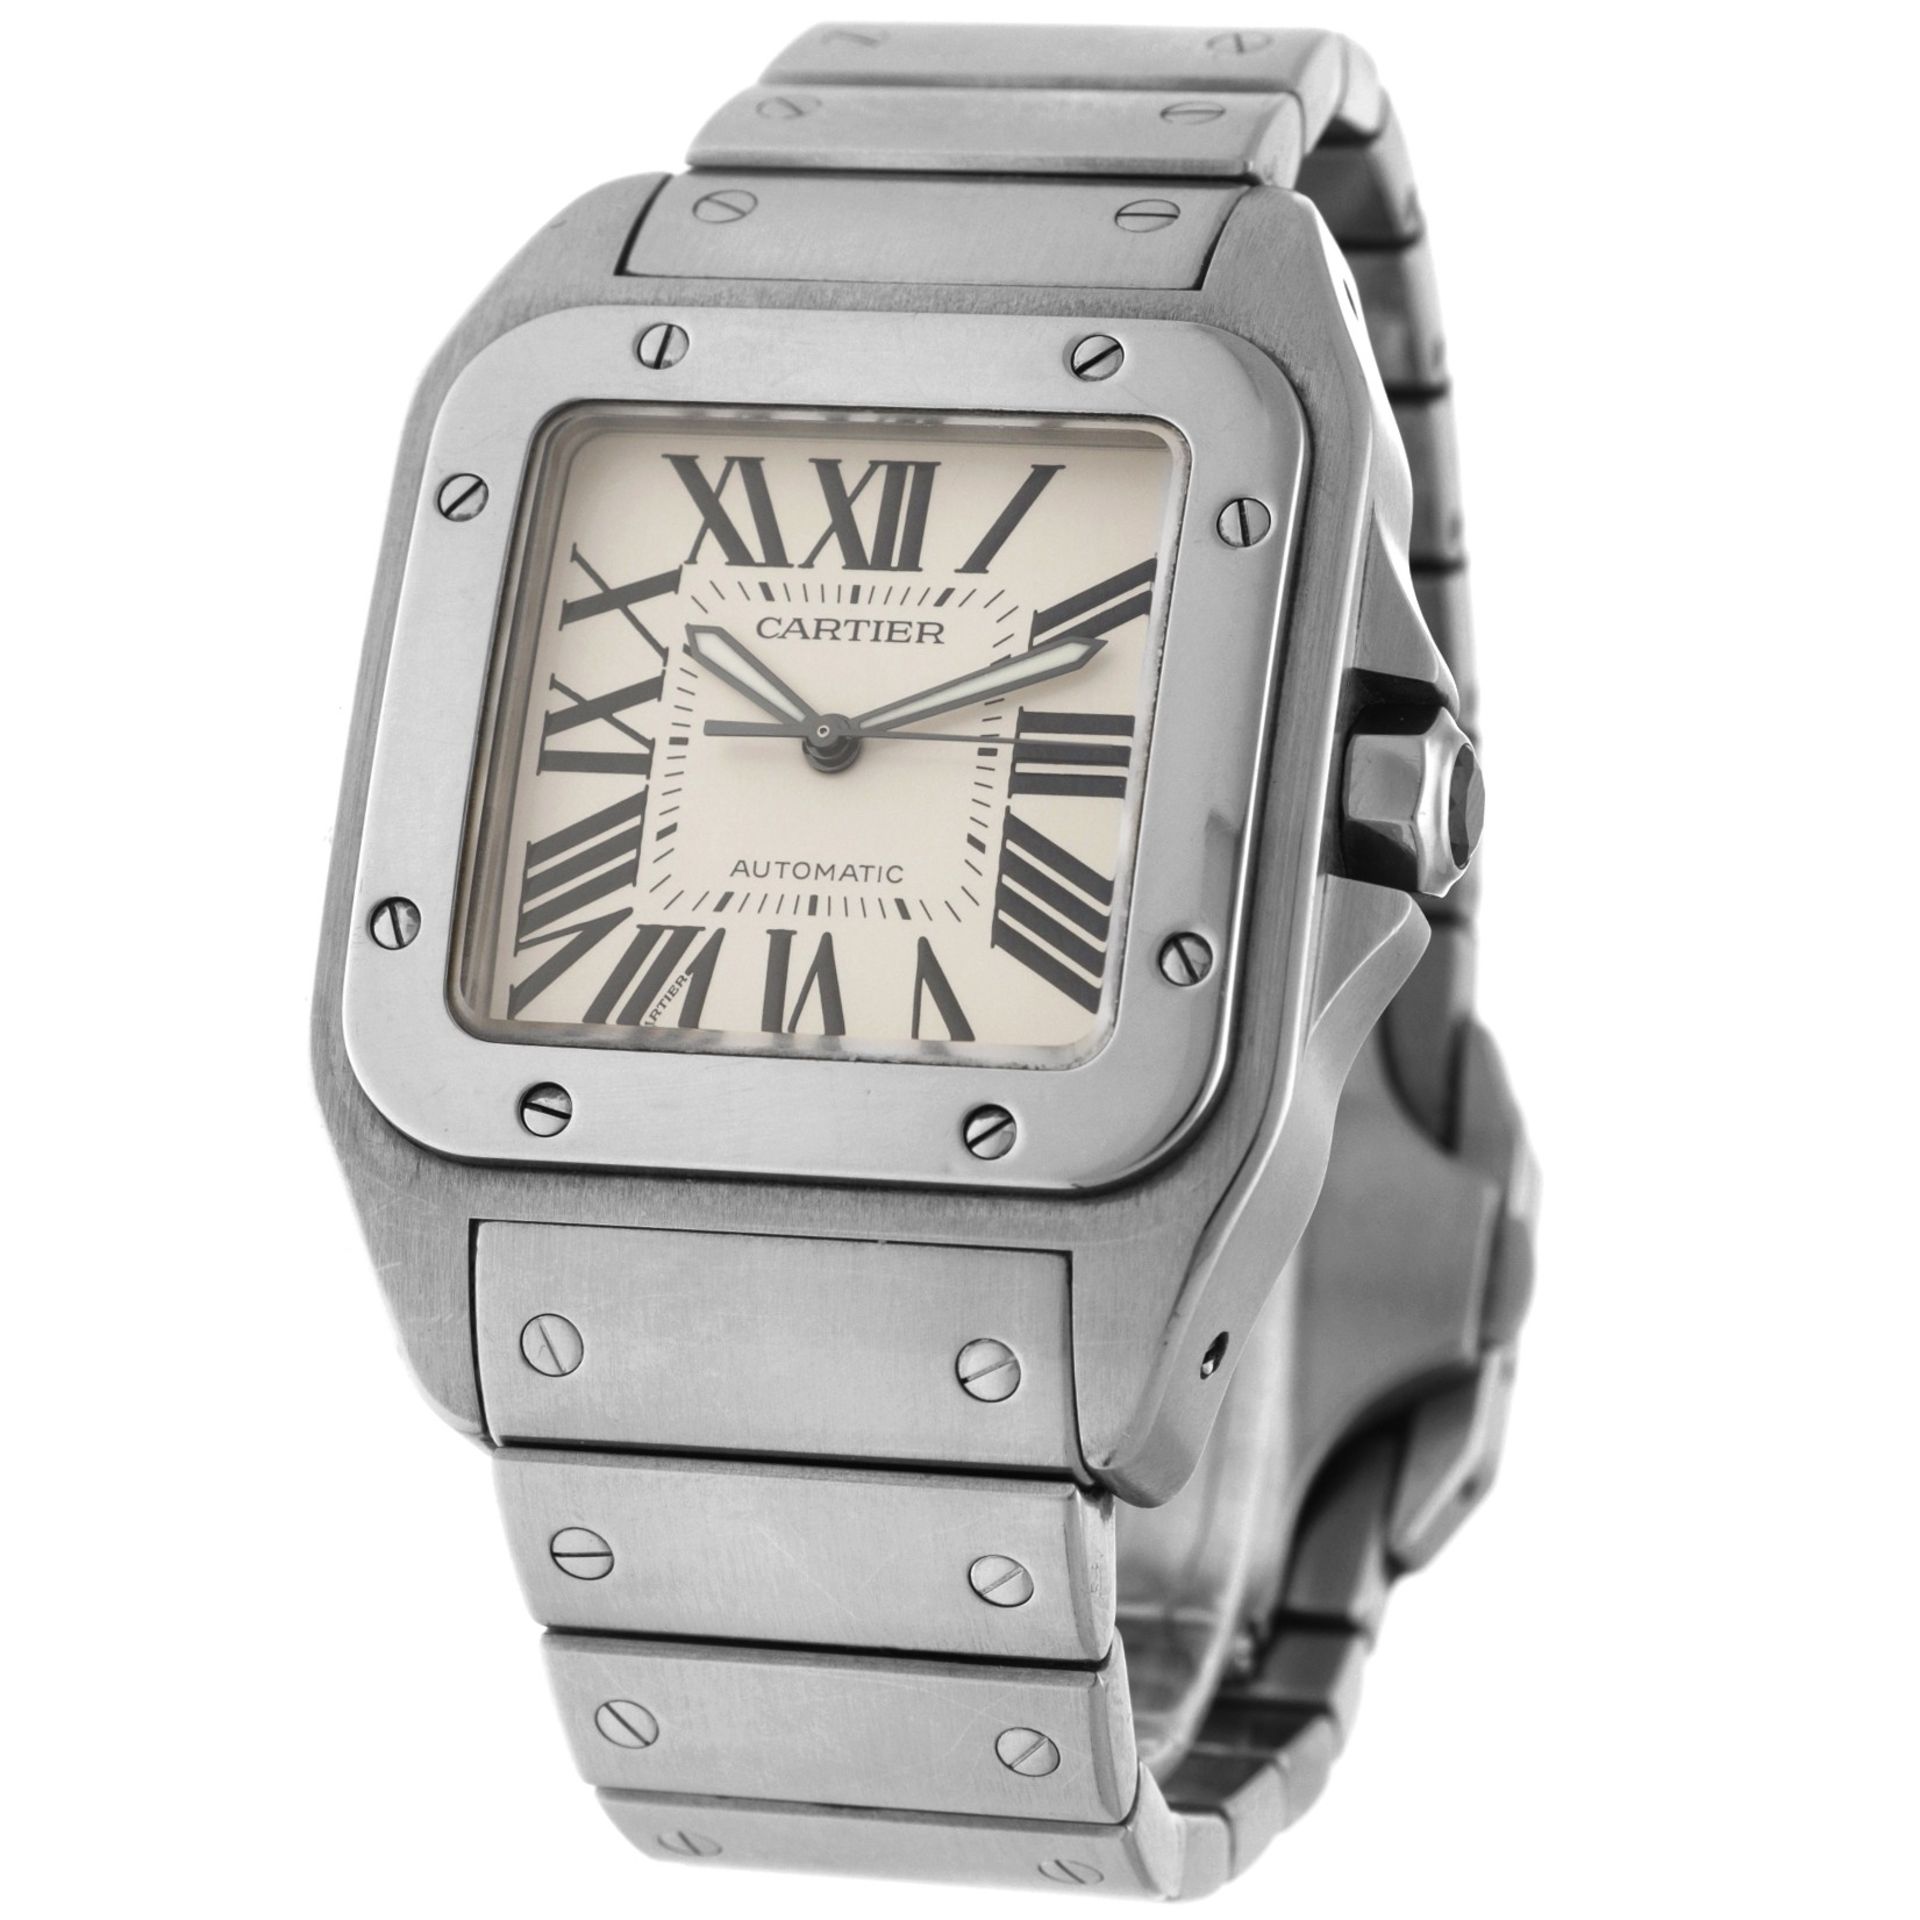 No Reserve - Cartier Santos 100 XL 2656 - Men's watch.  - Image 2 of 6